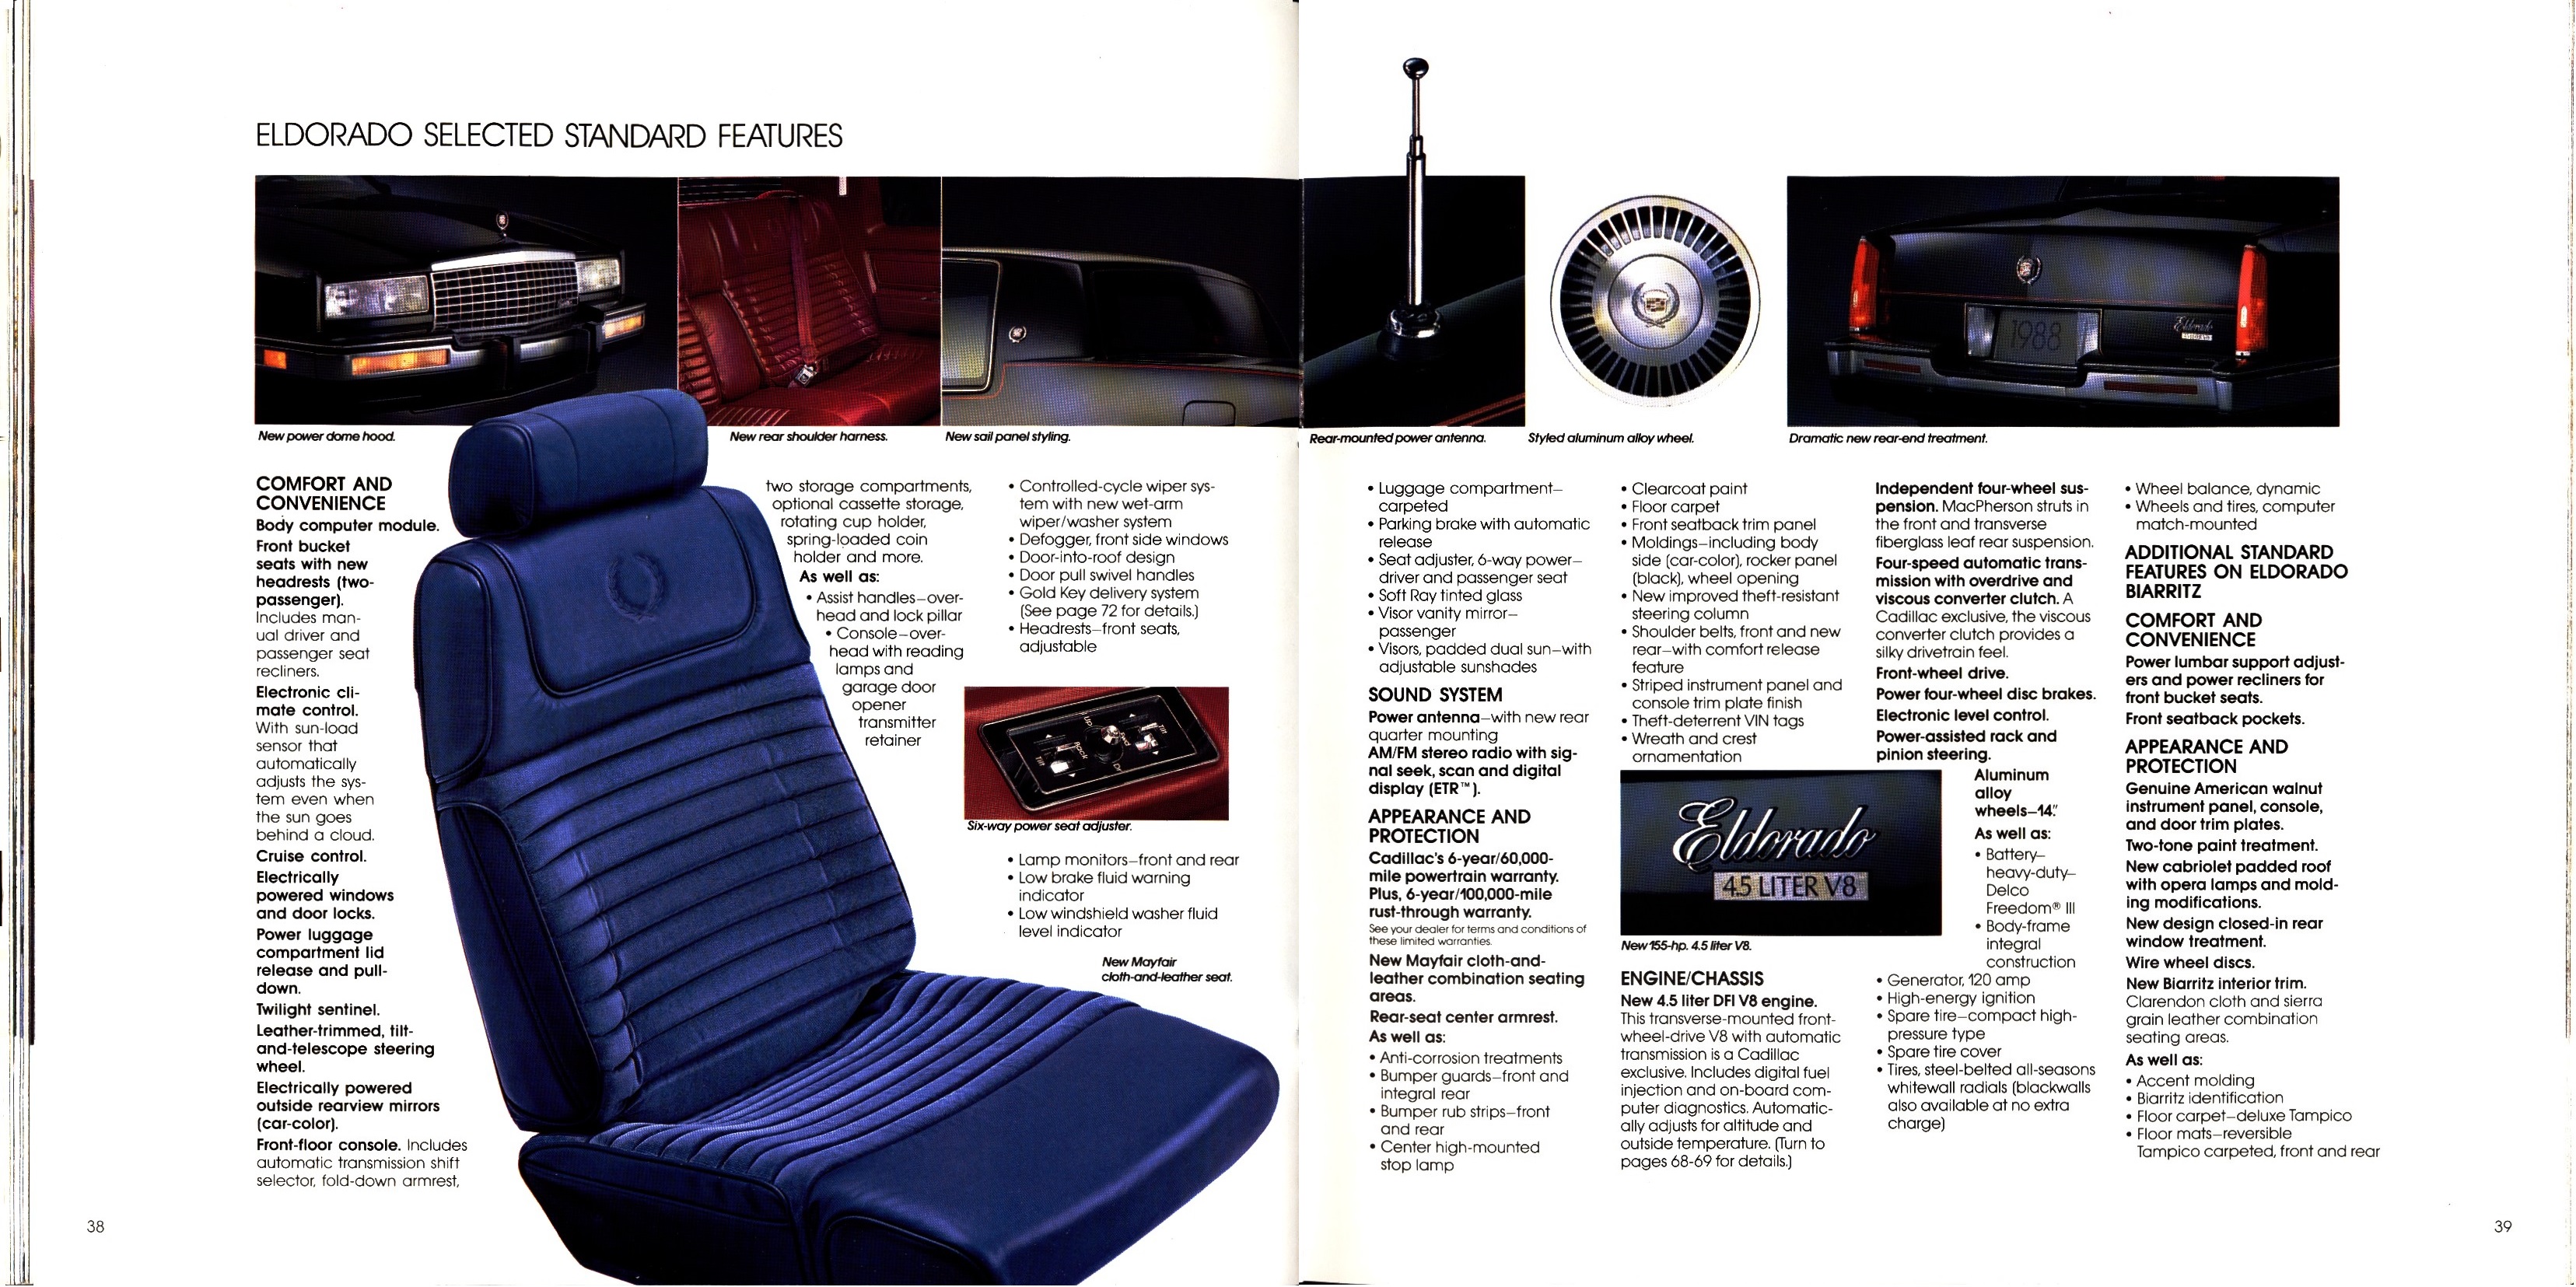 1988 Cadillac Full Line Prestige Brochure 38-39